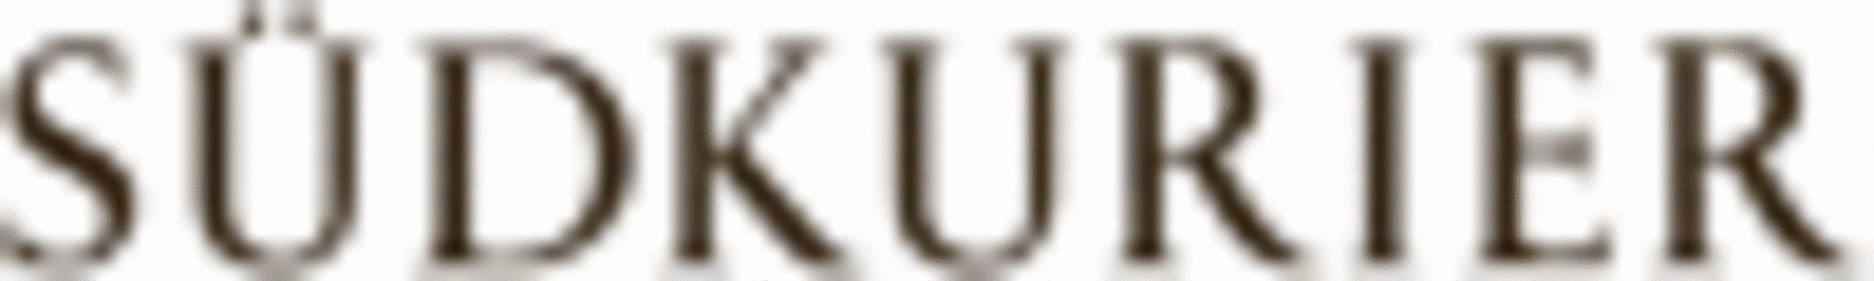 Logo Südkurier